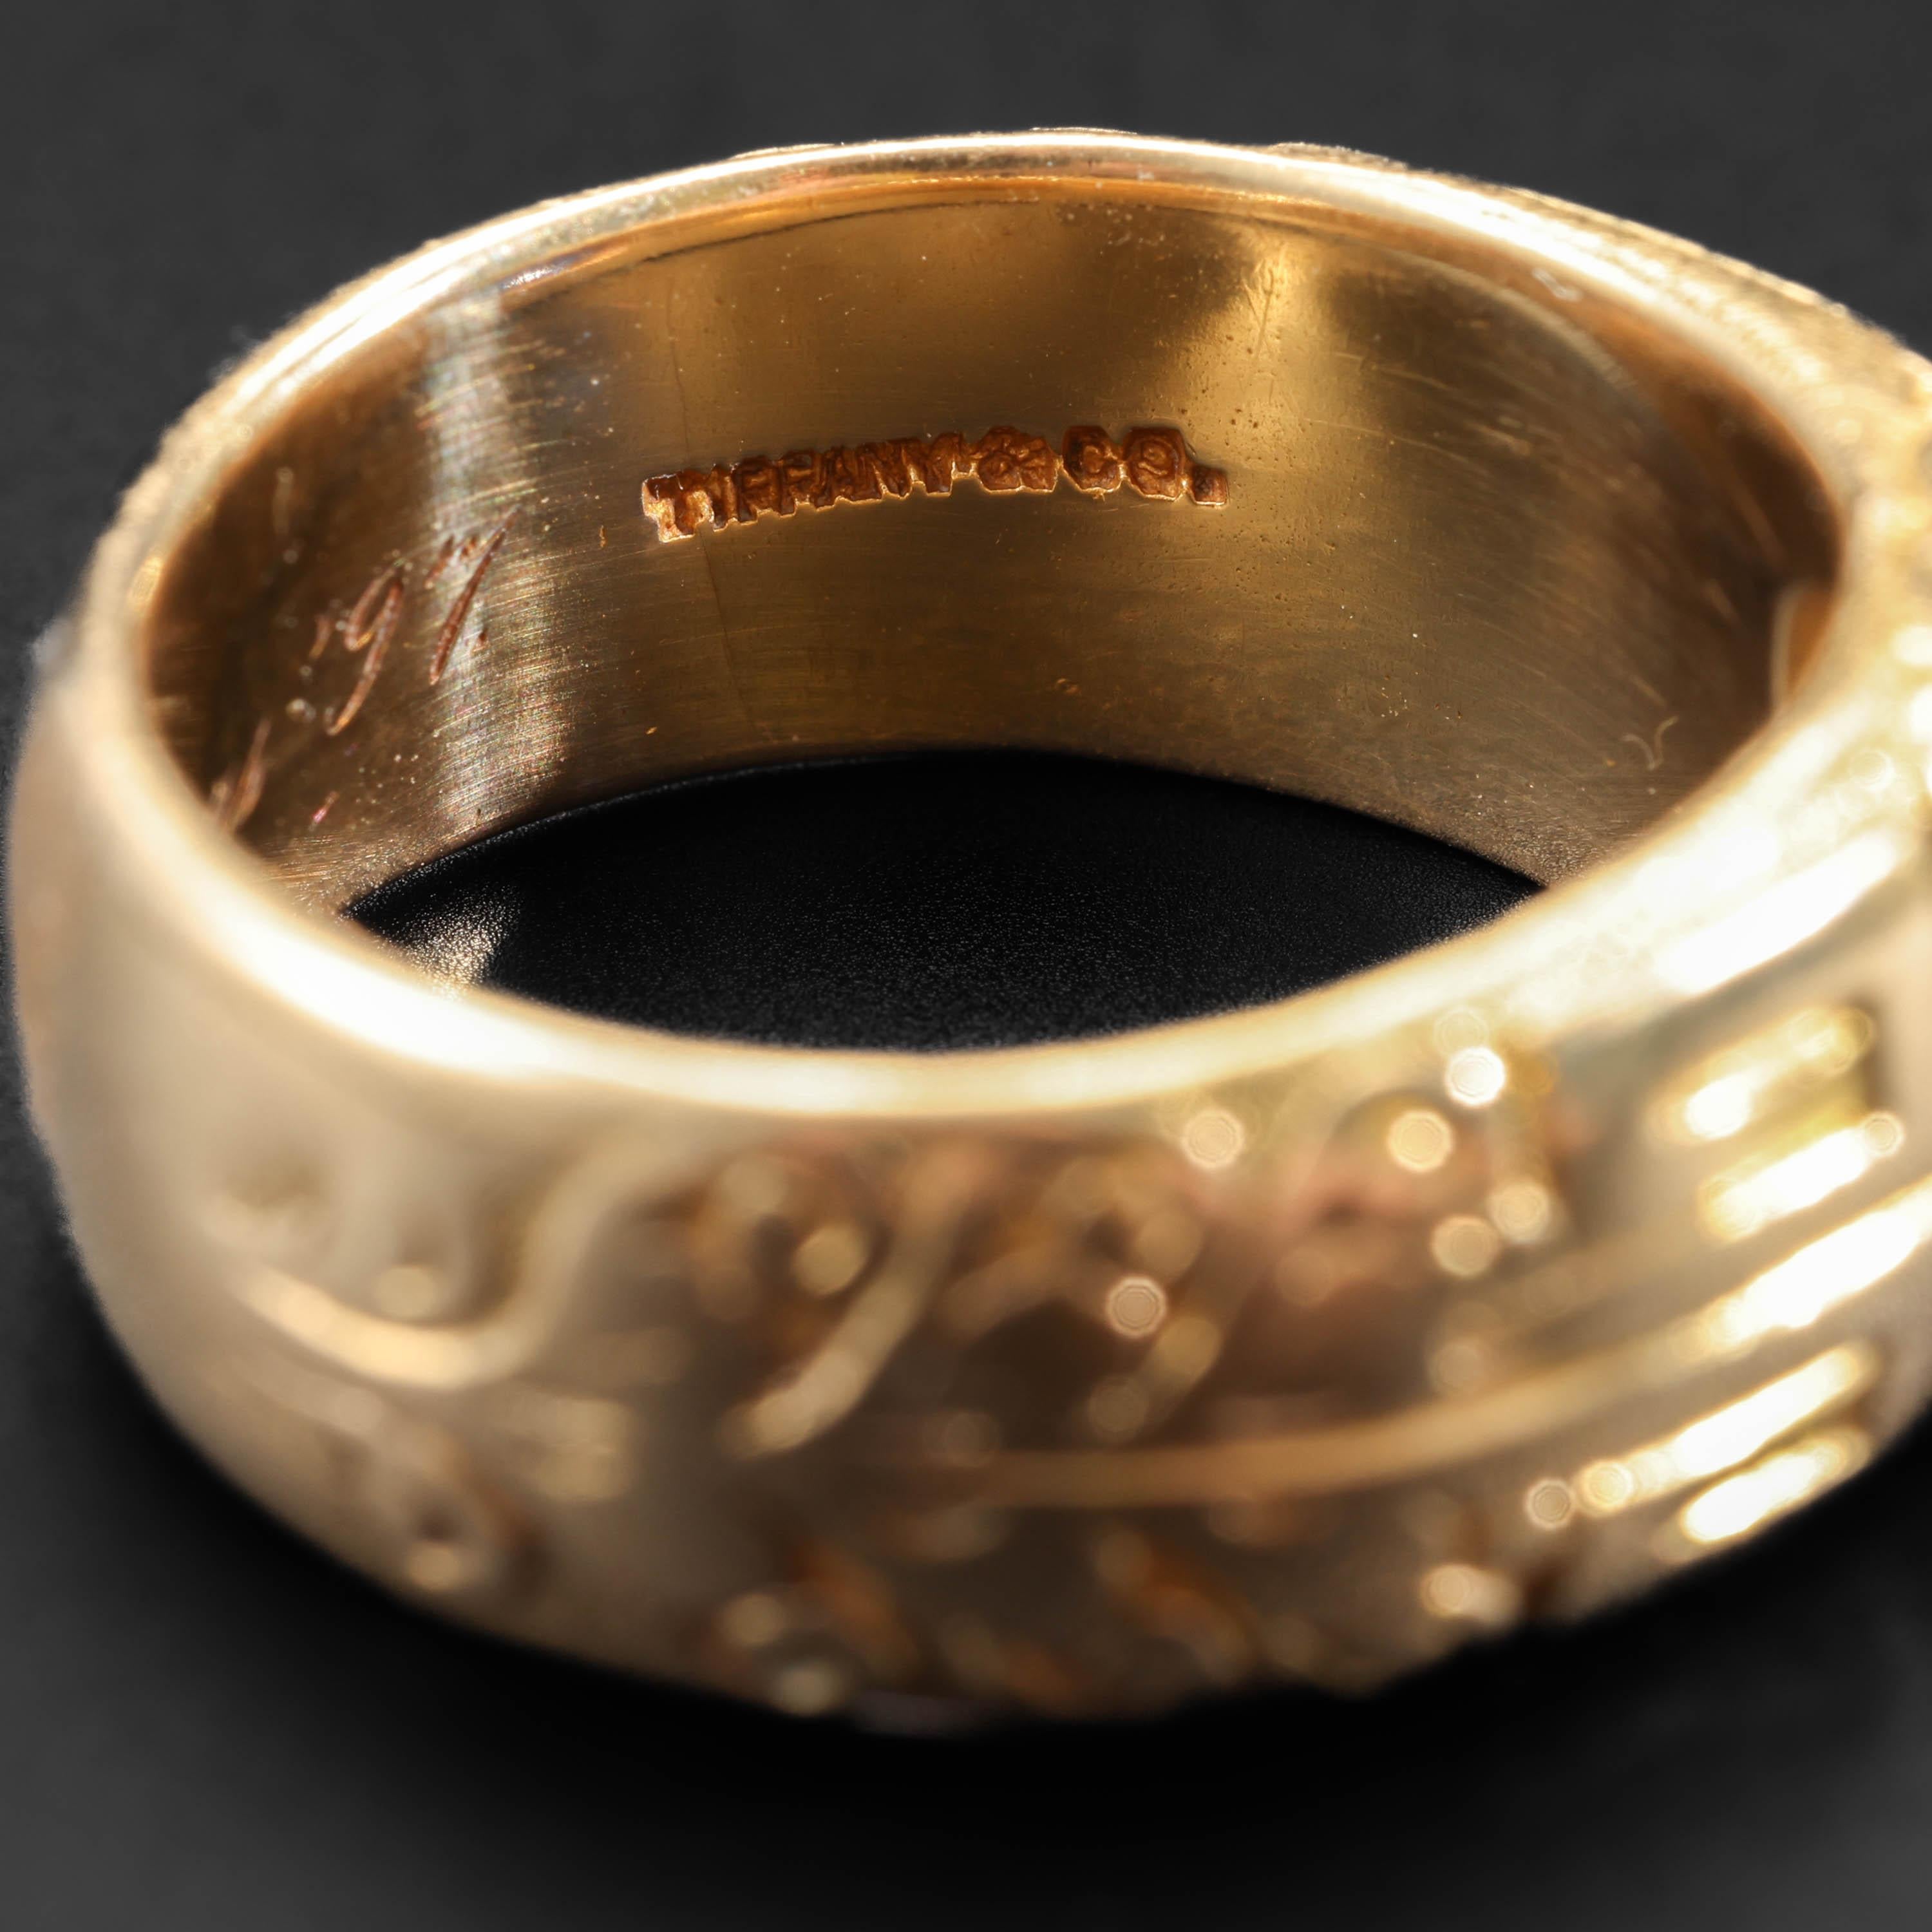 Tiffany & Co. Kashmir Sapphire Ring Edwardian AGL Certified Untreated 5